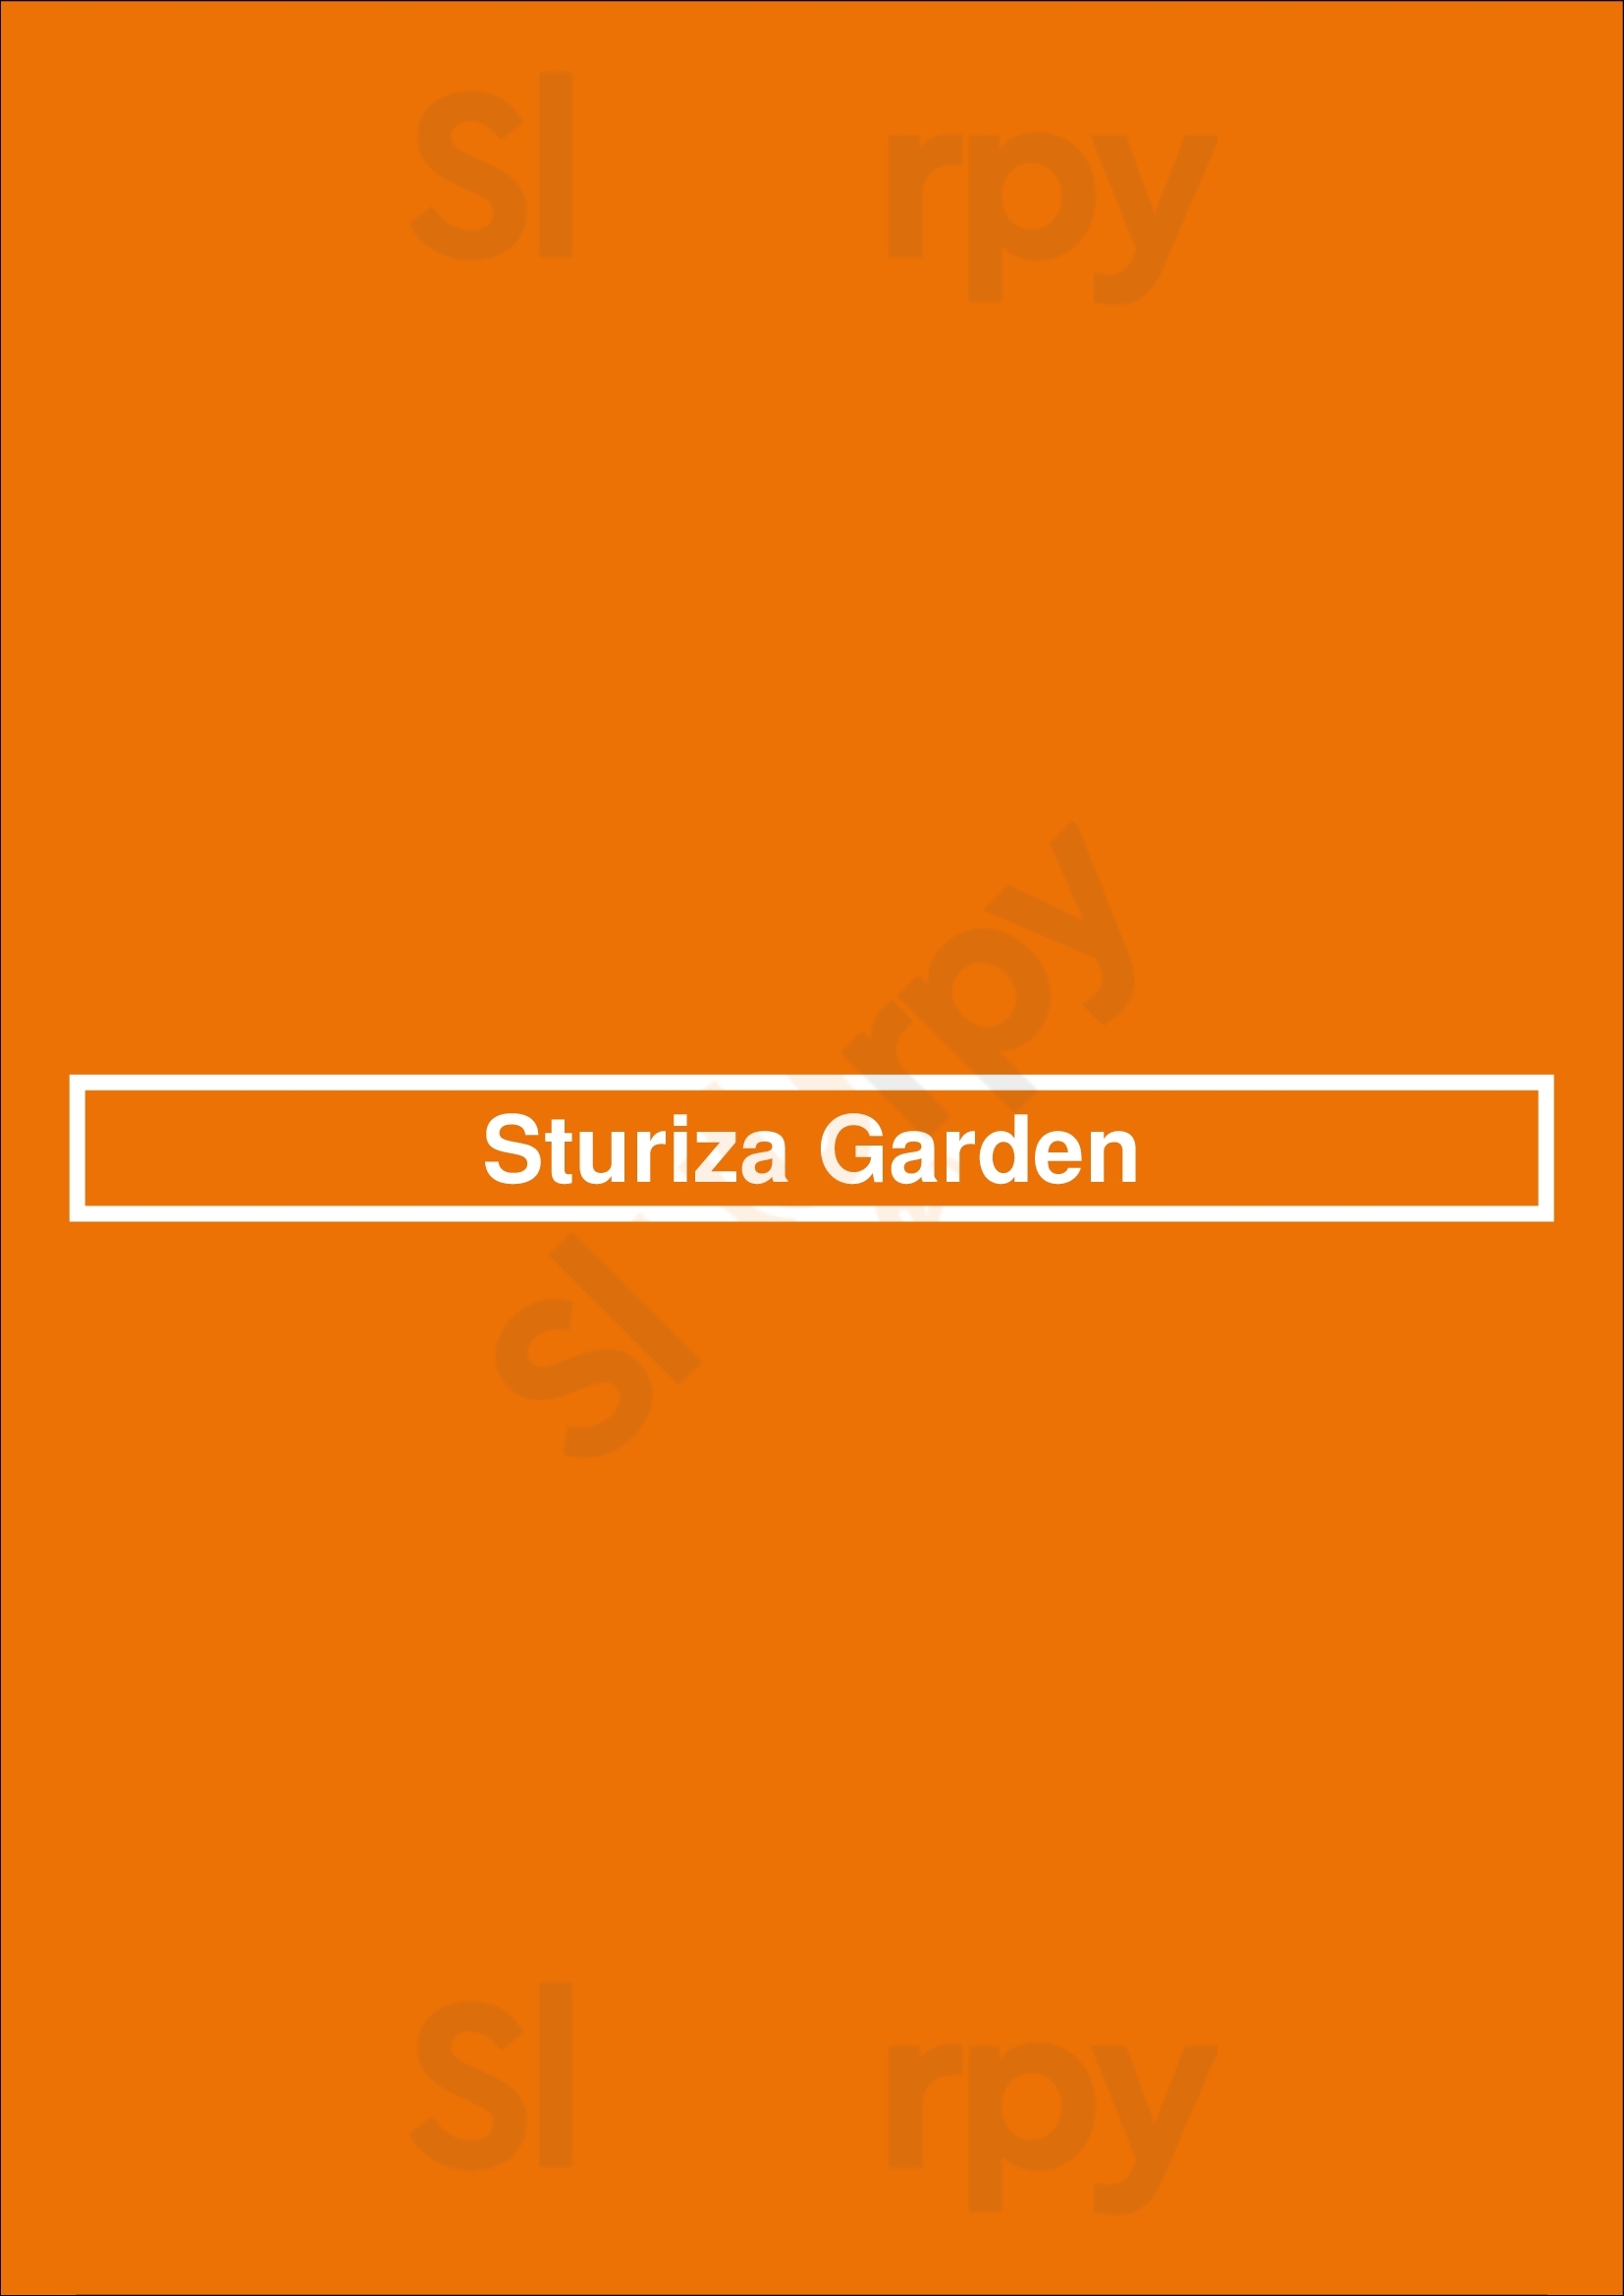 Sturiza Garden Olivos Menu - 1